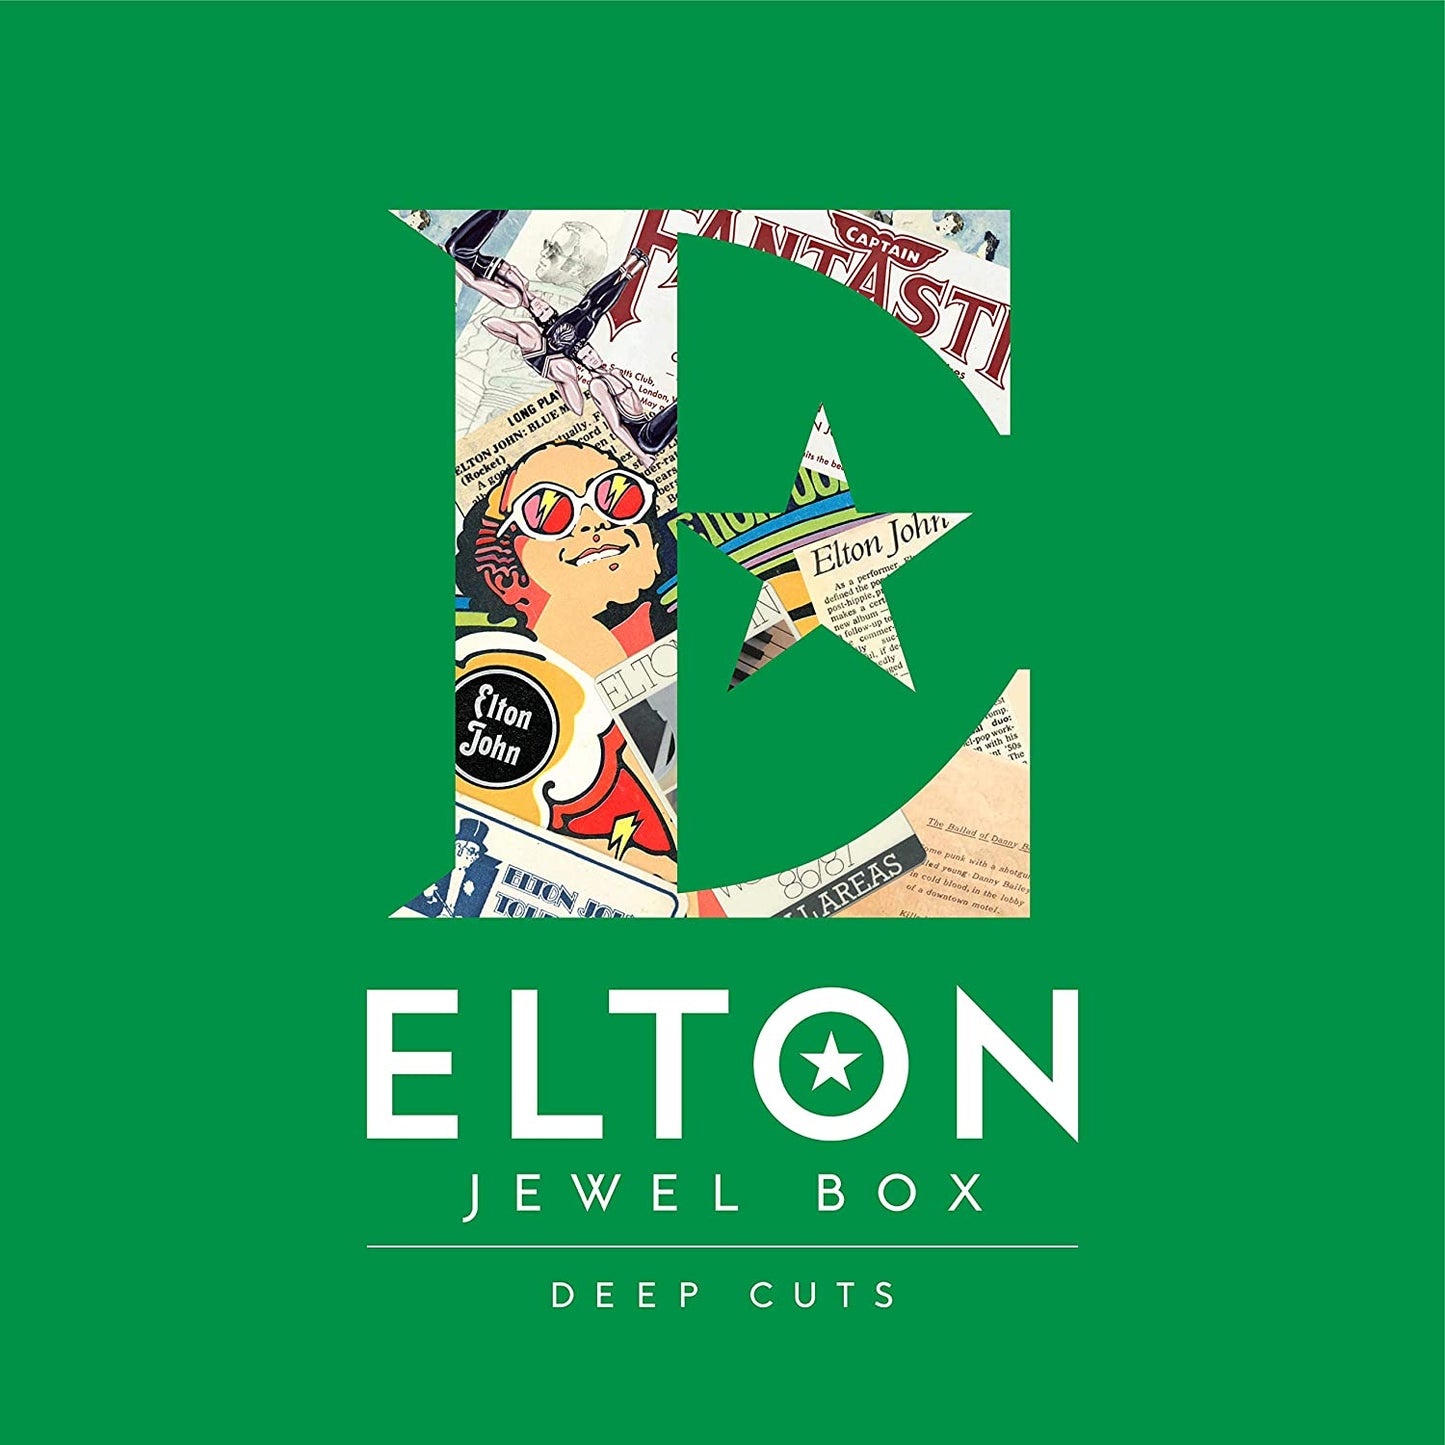 John, Elton/Elton: Jewel Box Deep Cuts (4LP Set)